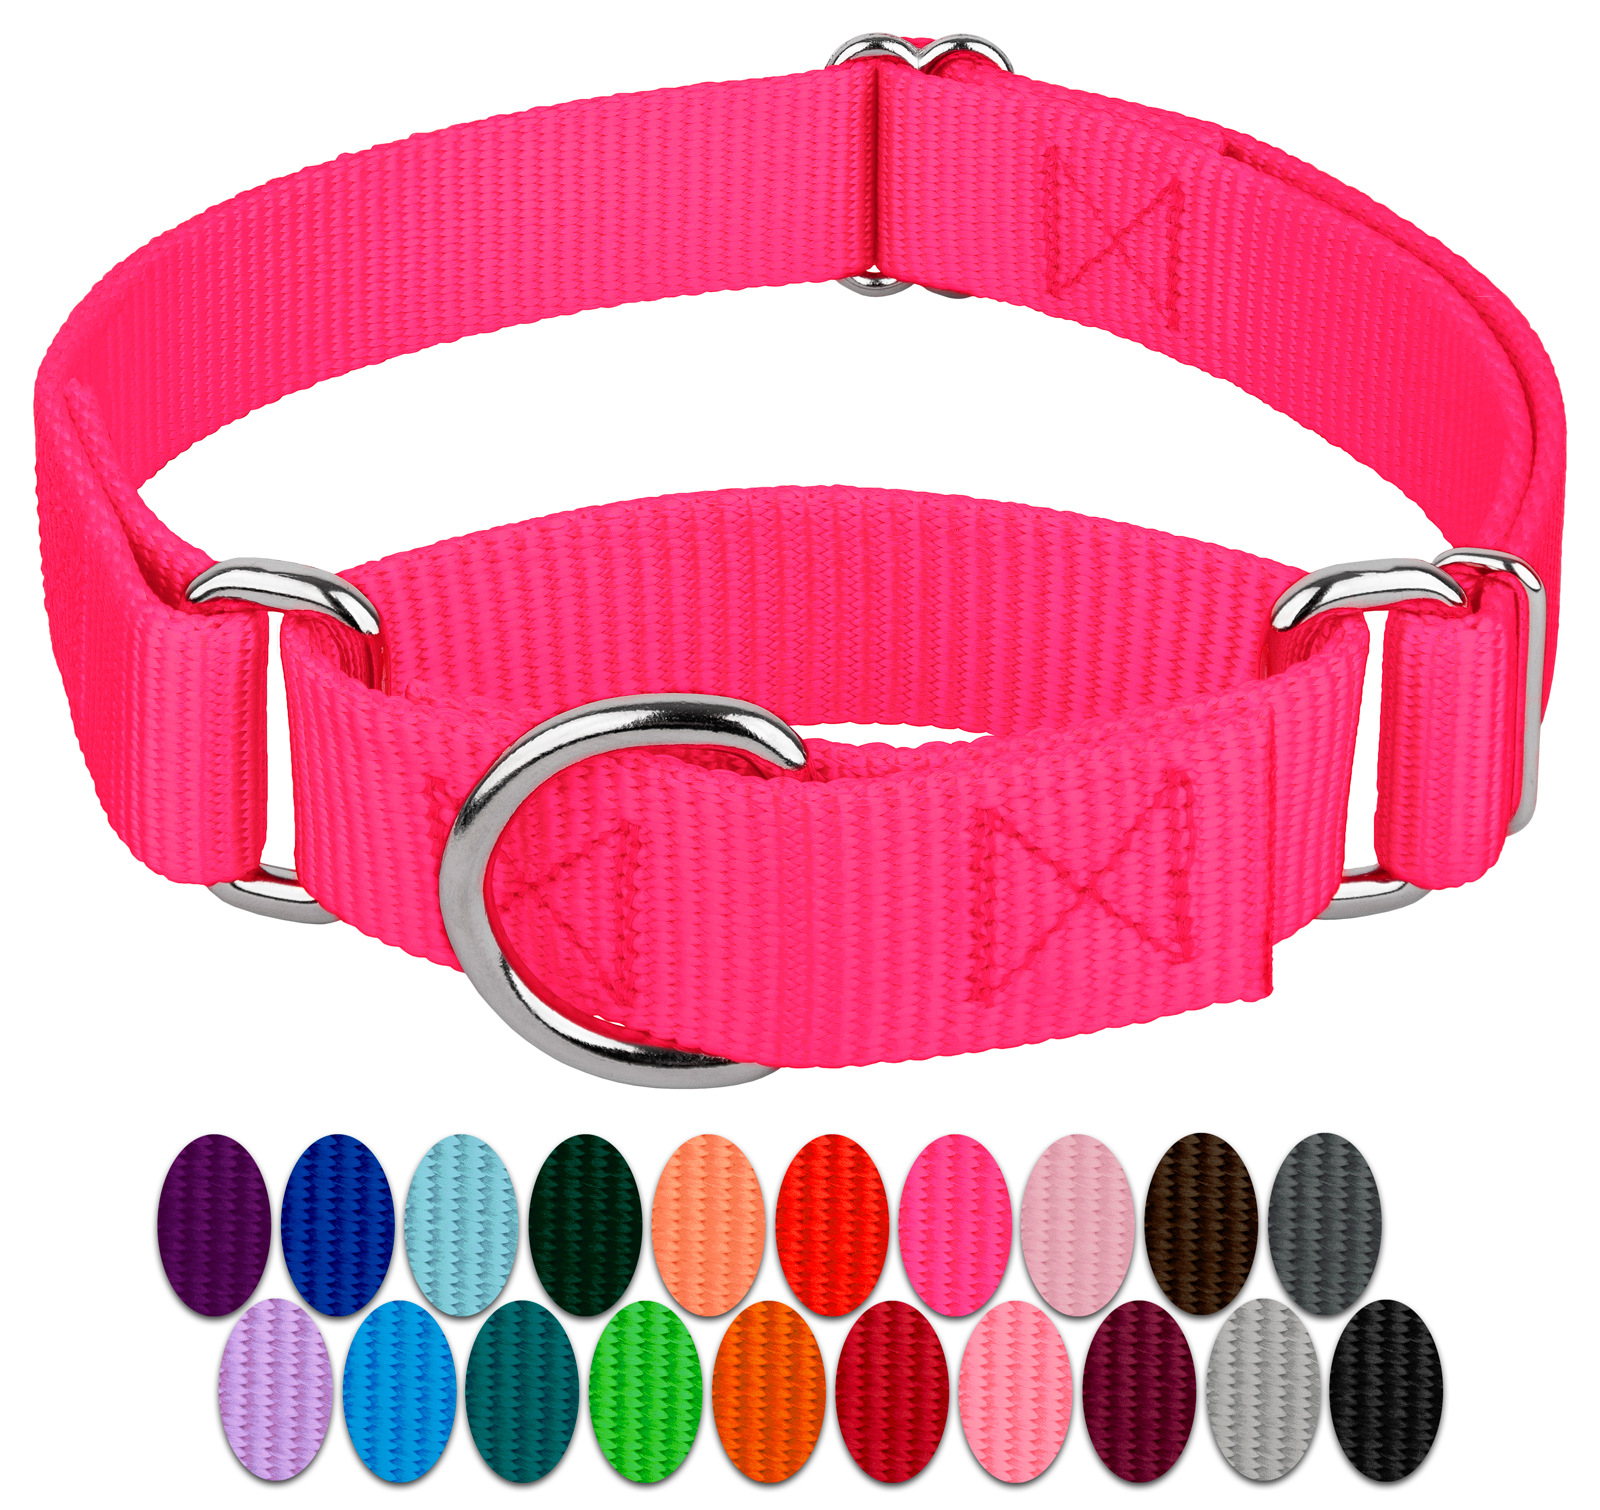 Country Brook Design Plastic & Nylon Plain Slip-On Dog Collar, Pink, L - image 1 of 8